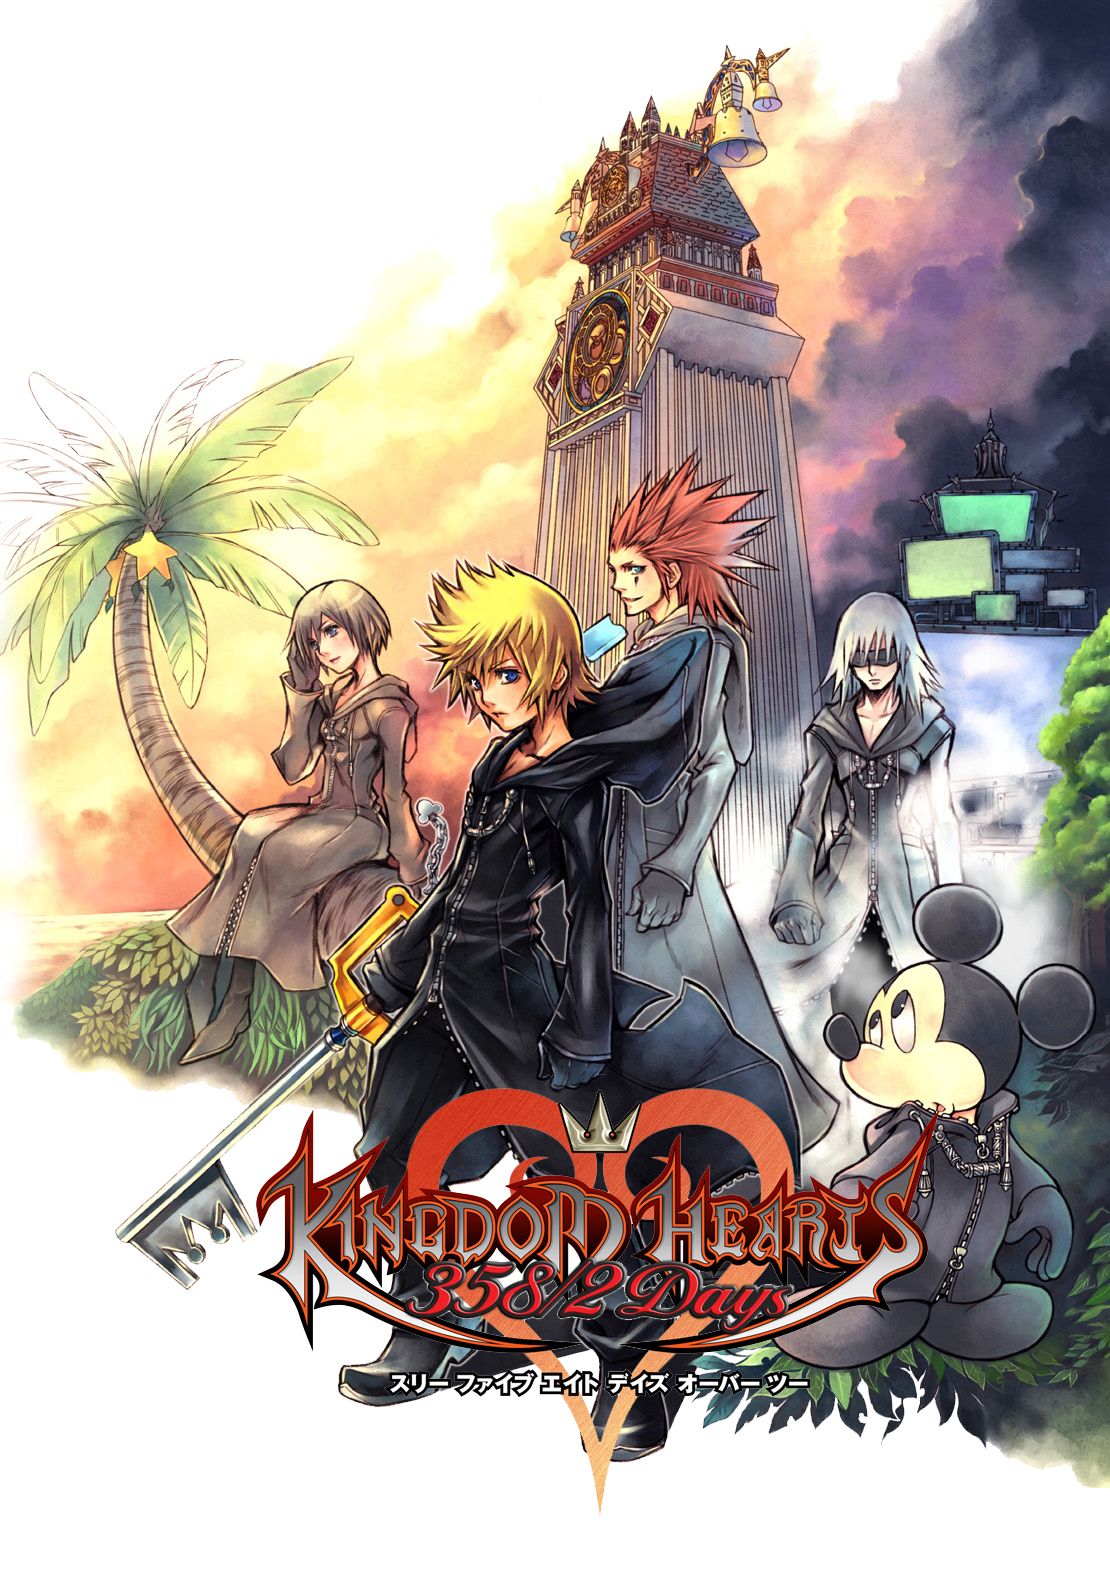 Kingdom Hearts Days Kingdom hearts games Kingdom hearts